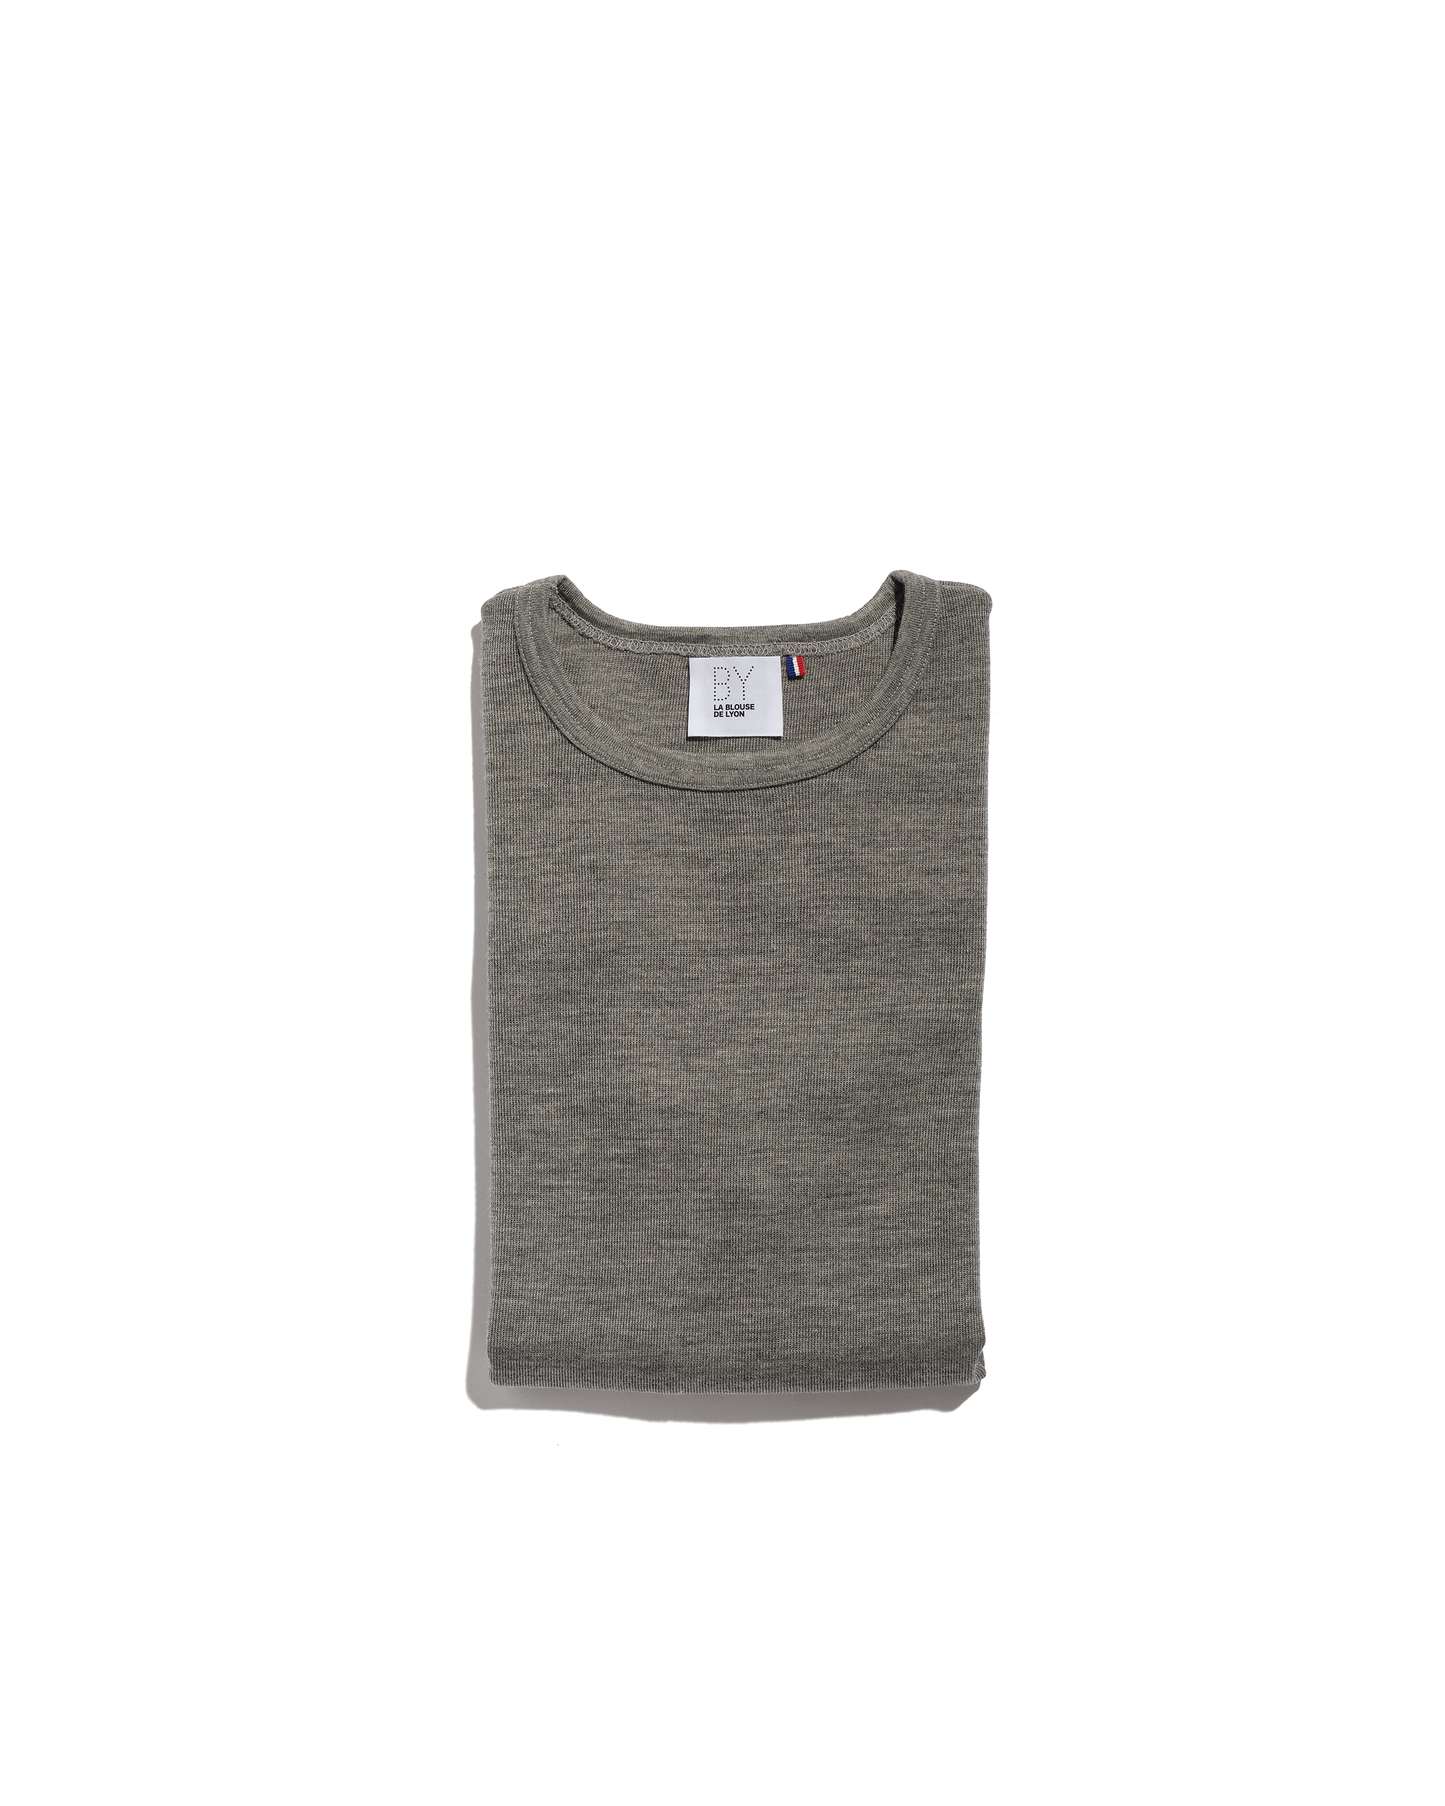 Gray 100% merino long-sleeved sweater